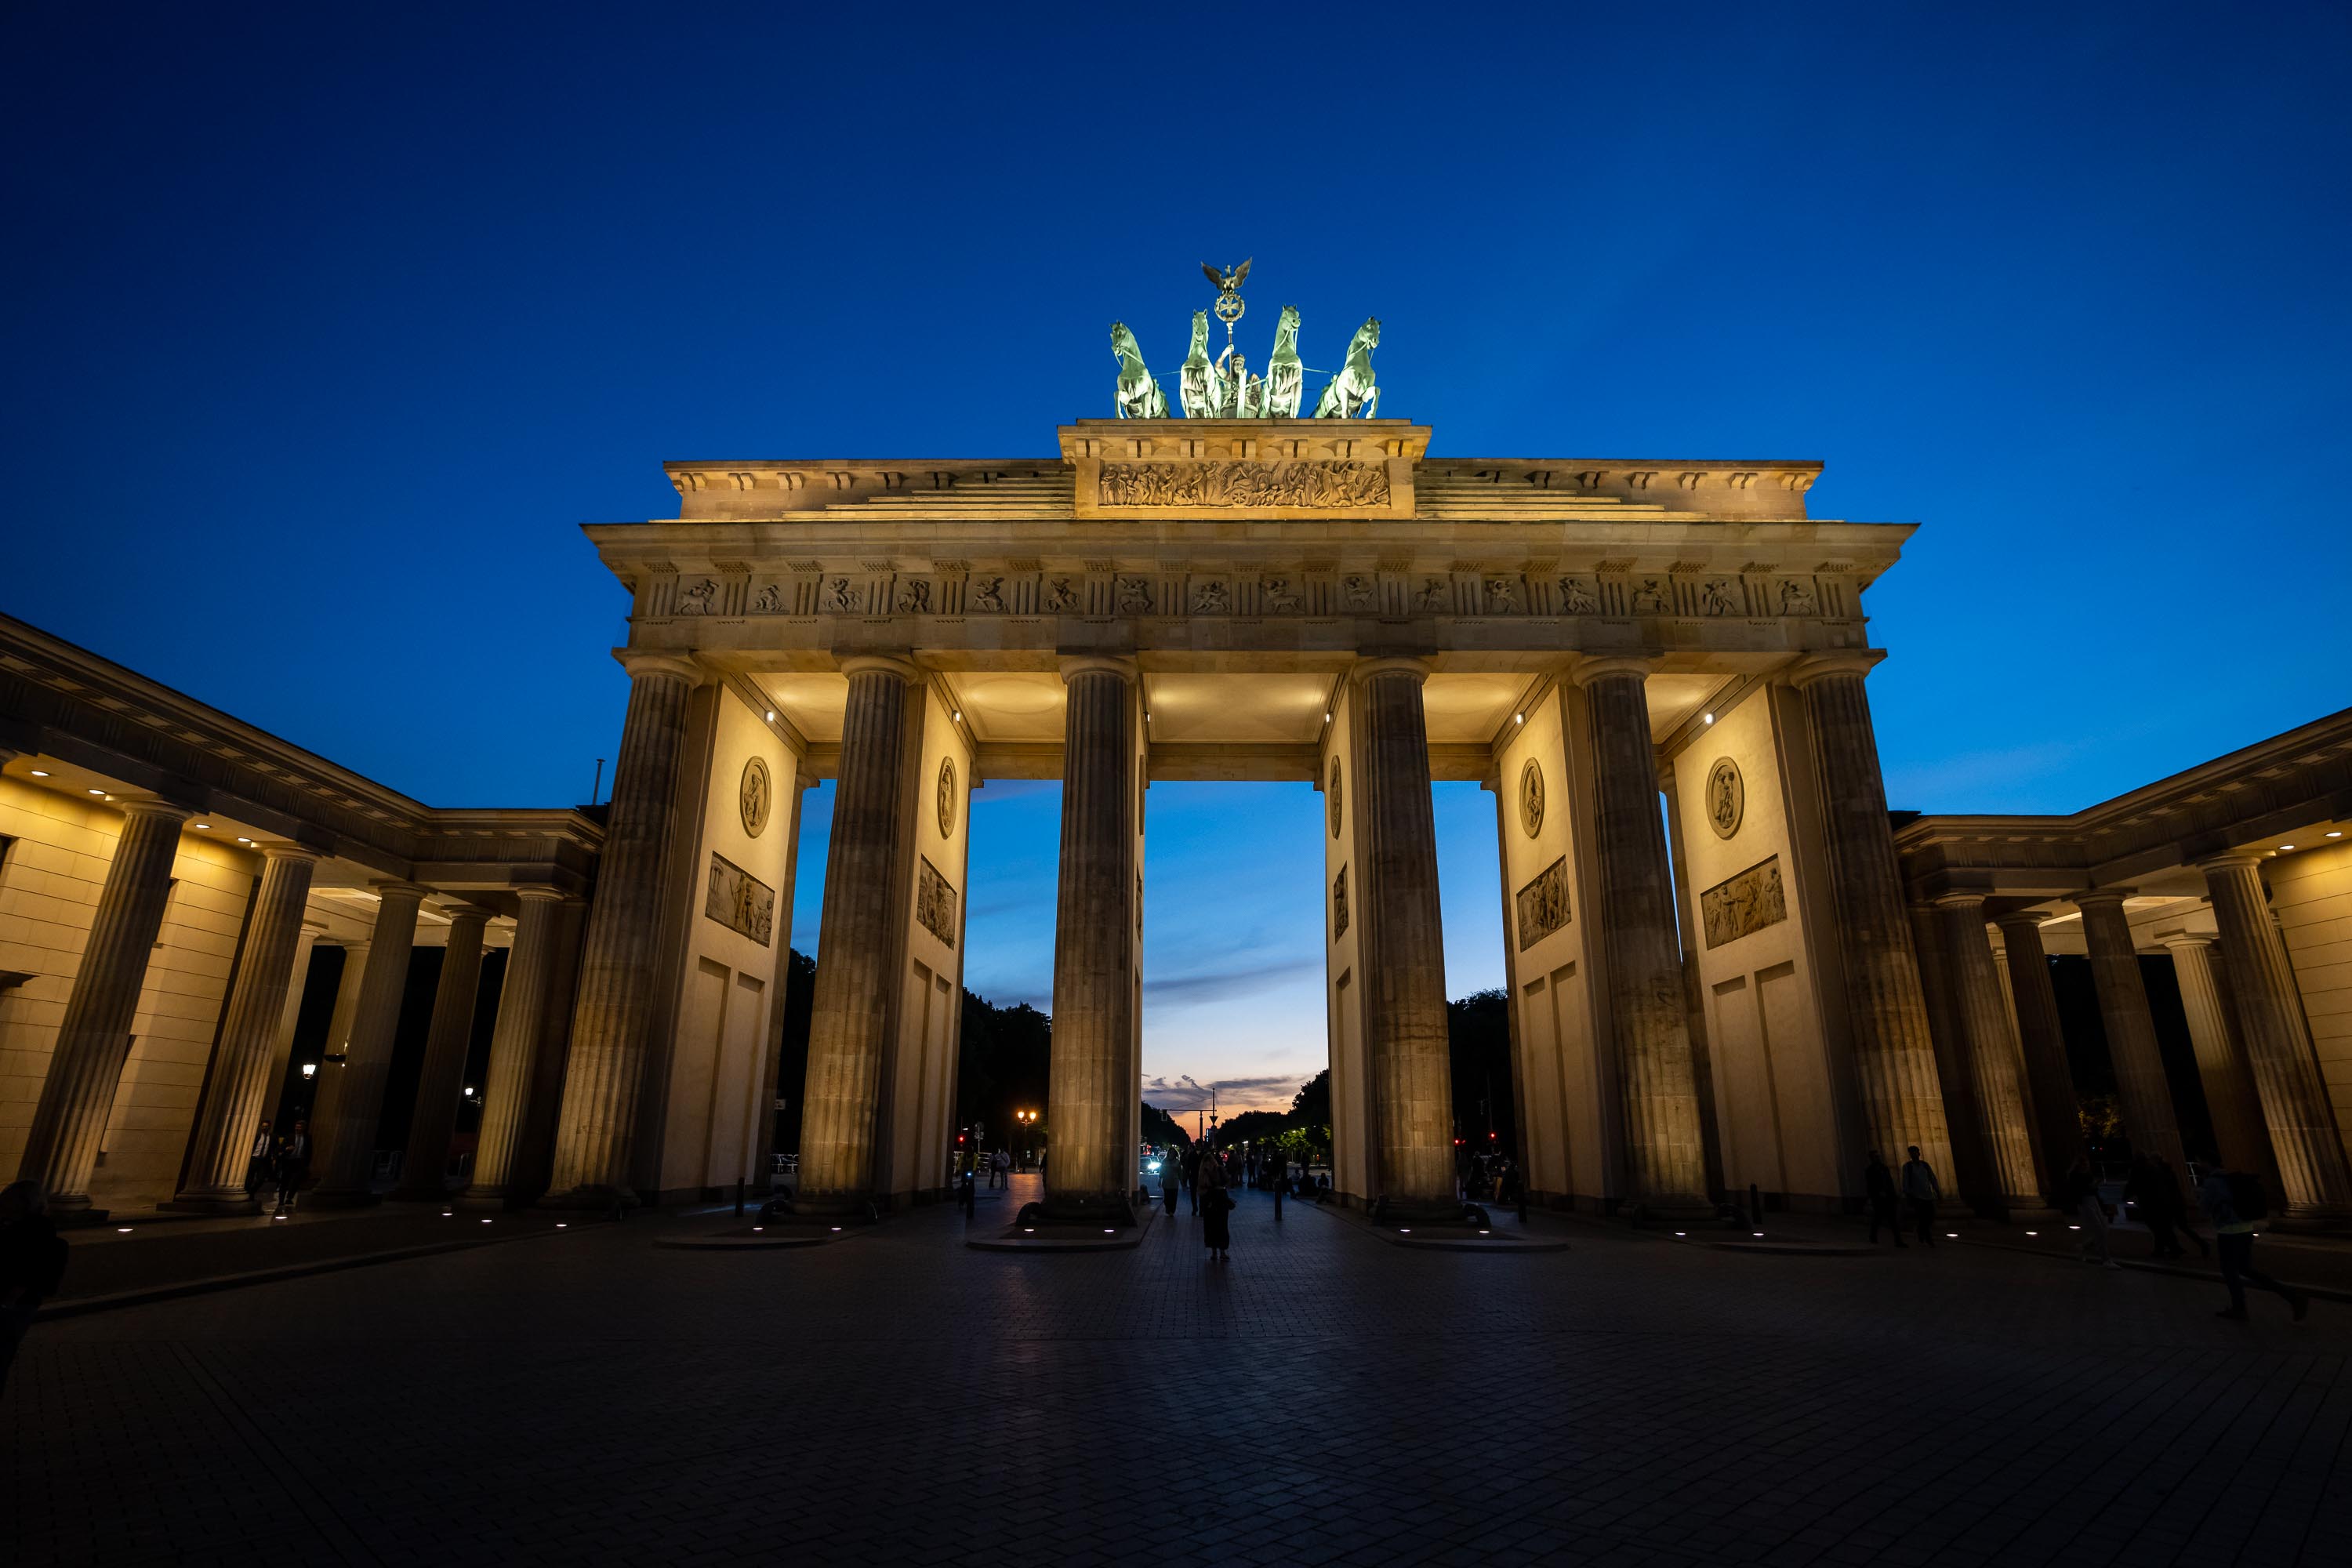 The iconic Brandenburg Gate at twilight